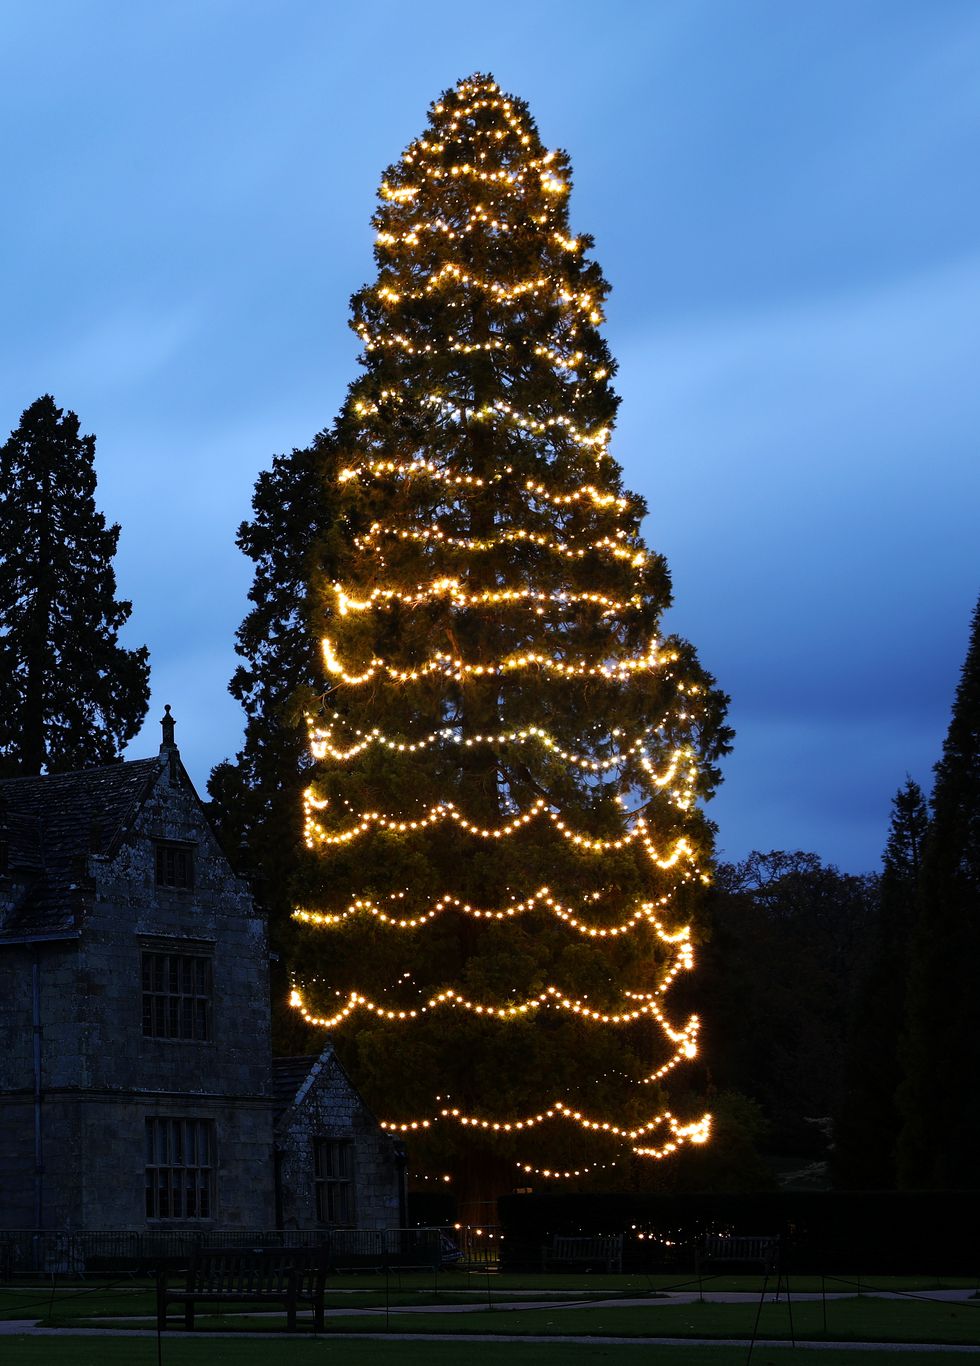 Britain's Biggest Christmas Tree Is Decorated For The Festive Season - Wakehurst at Haywards Heath